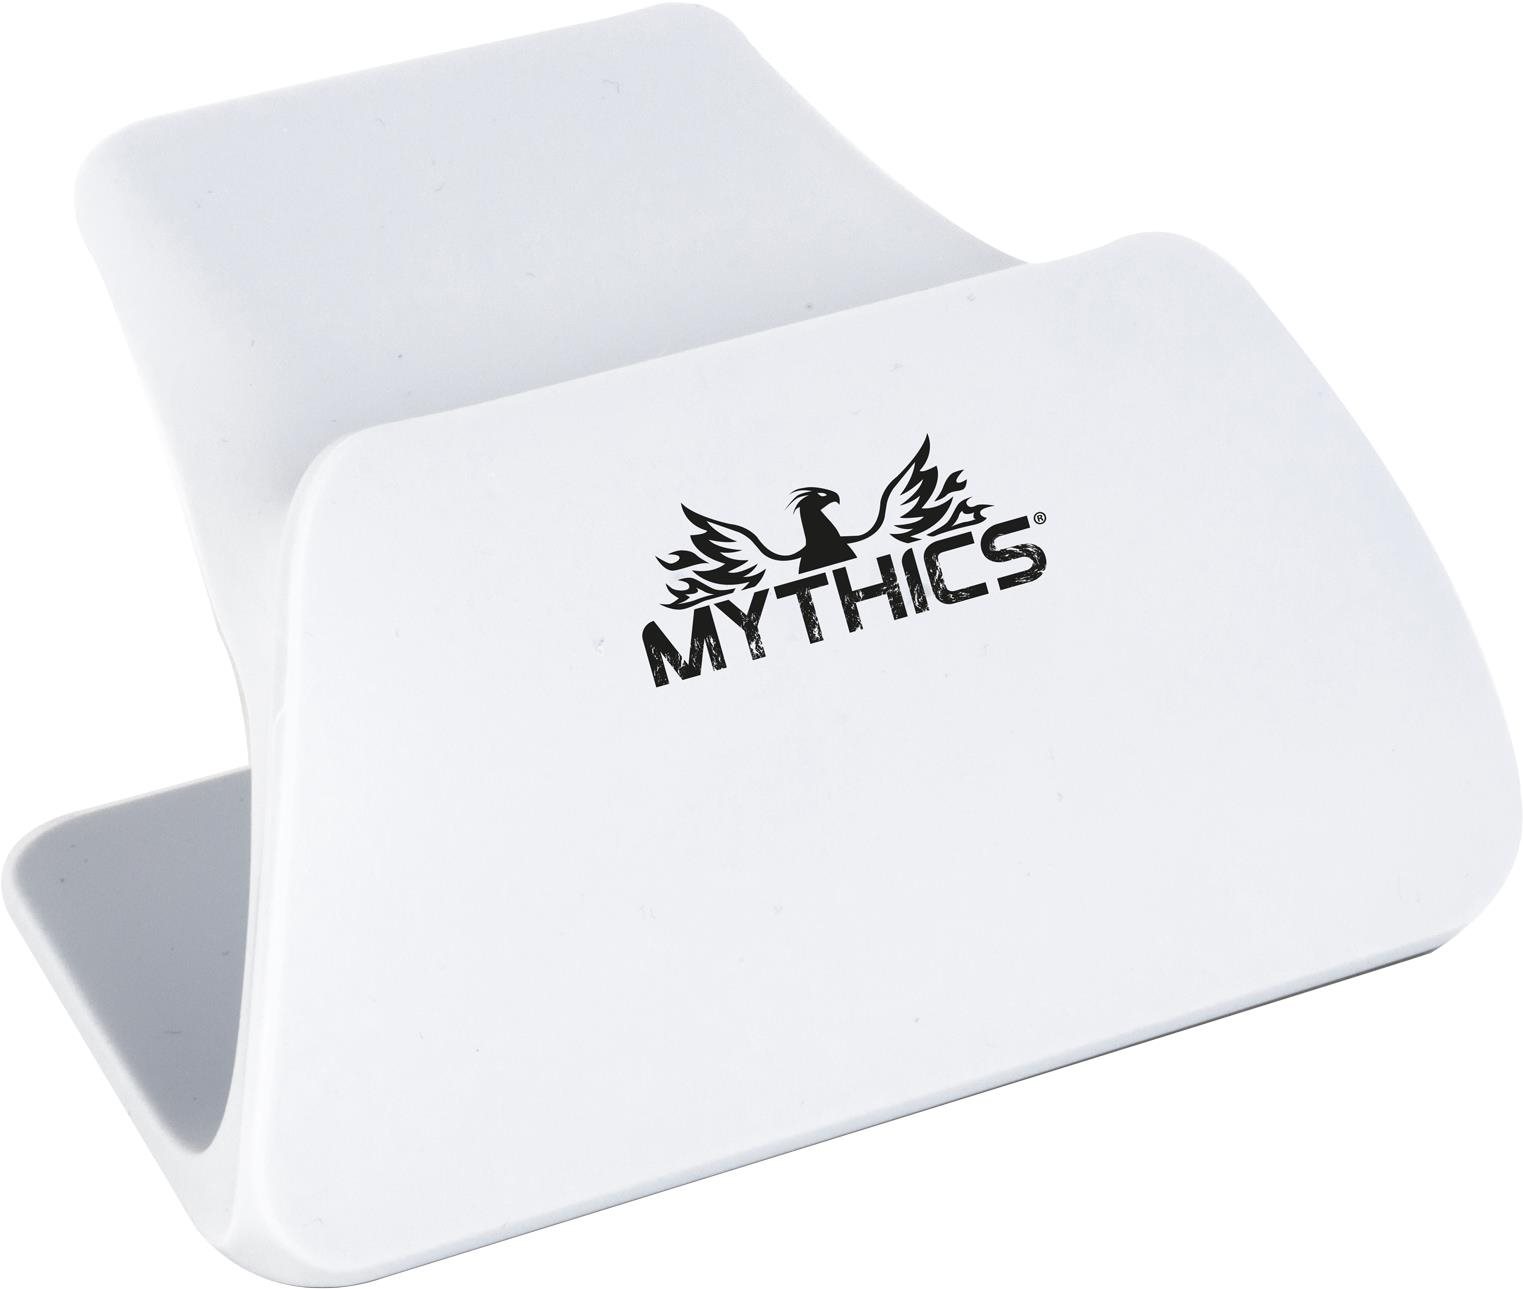 Mythics PlayStation 5 DualSense Storage